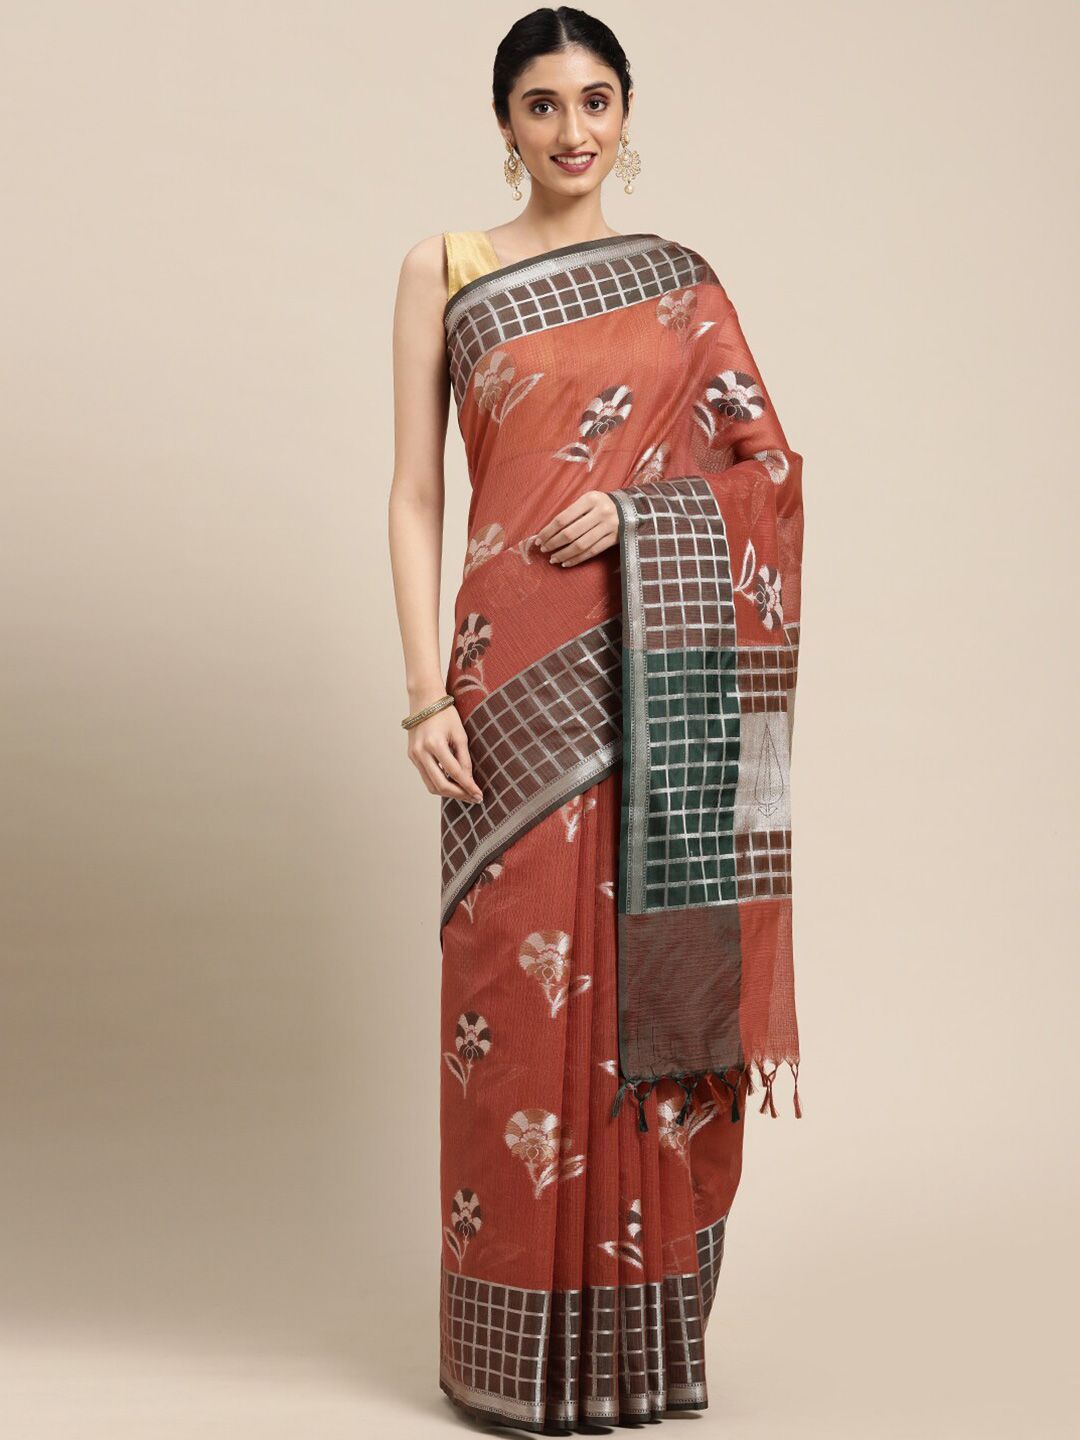 PTIEPL Banarasi Silk Works Brown & Silver-Toned Woven Design Zari Kota Saree Price in India